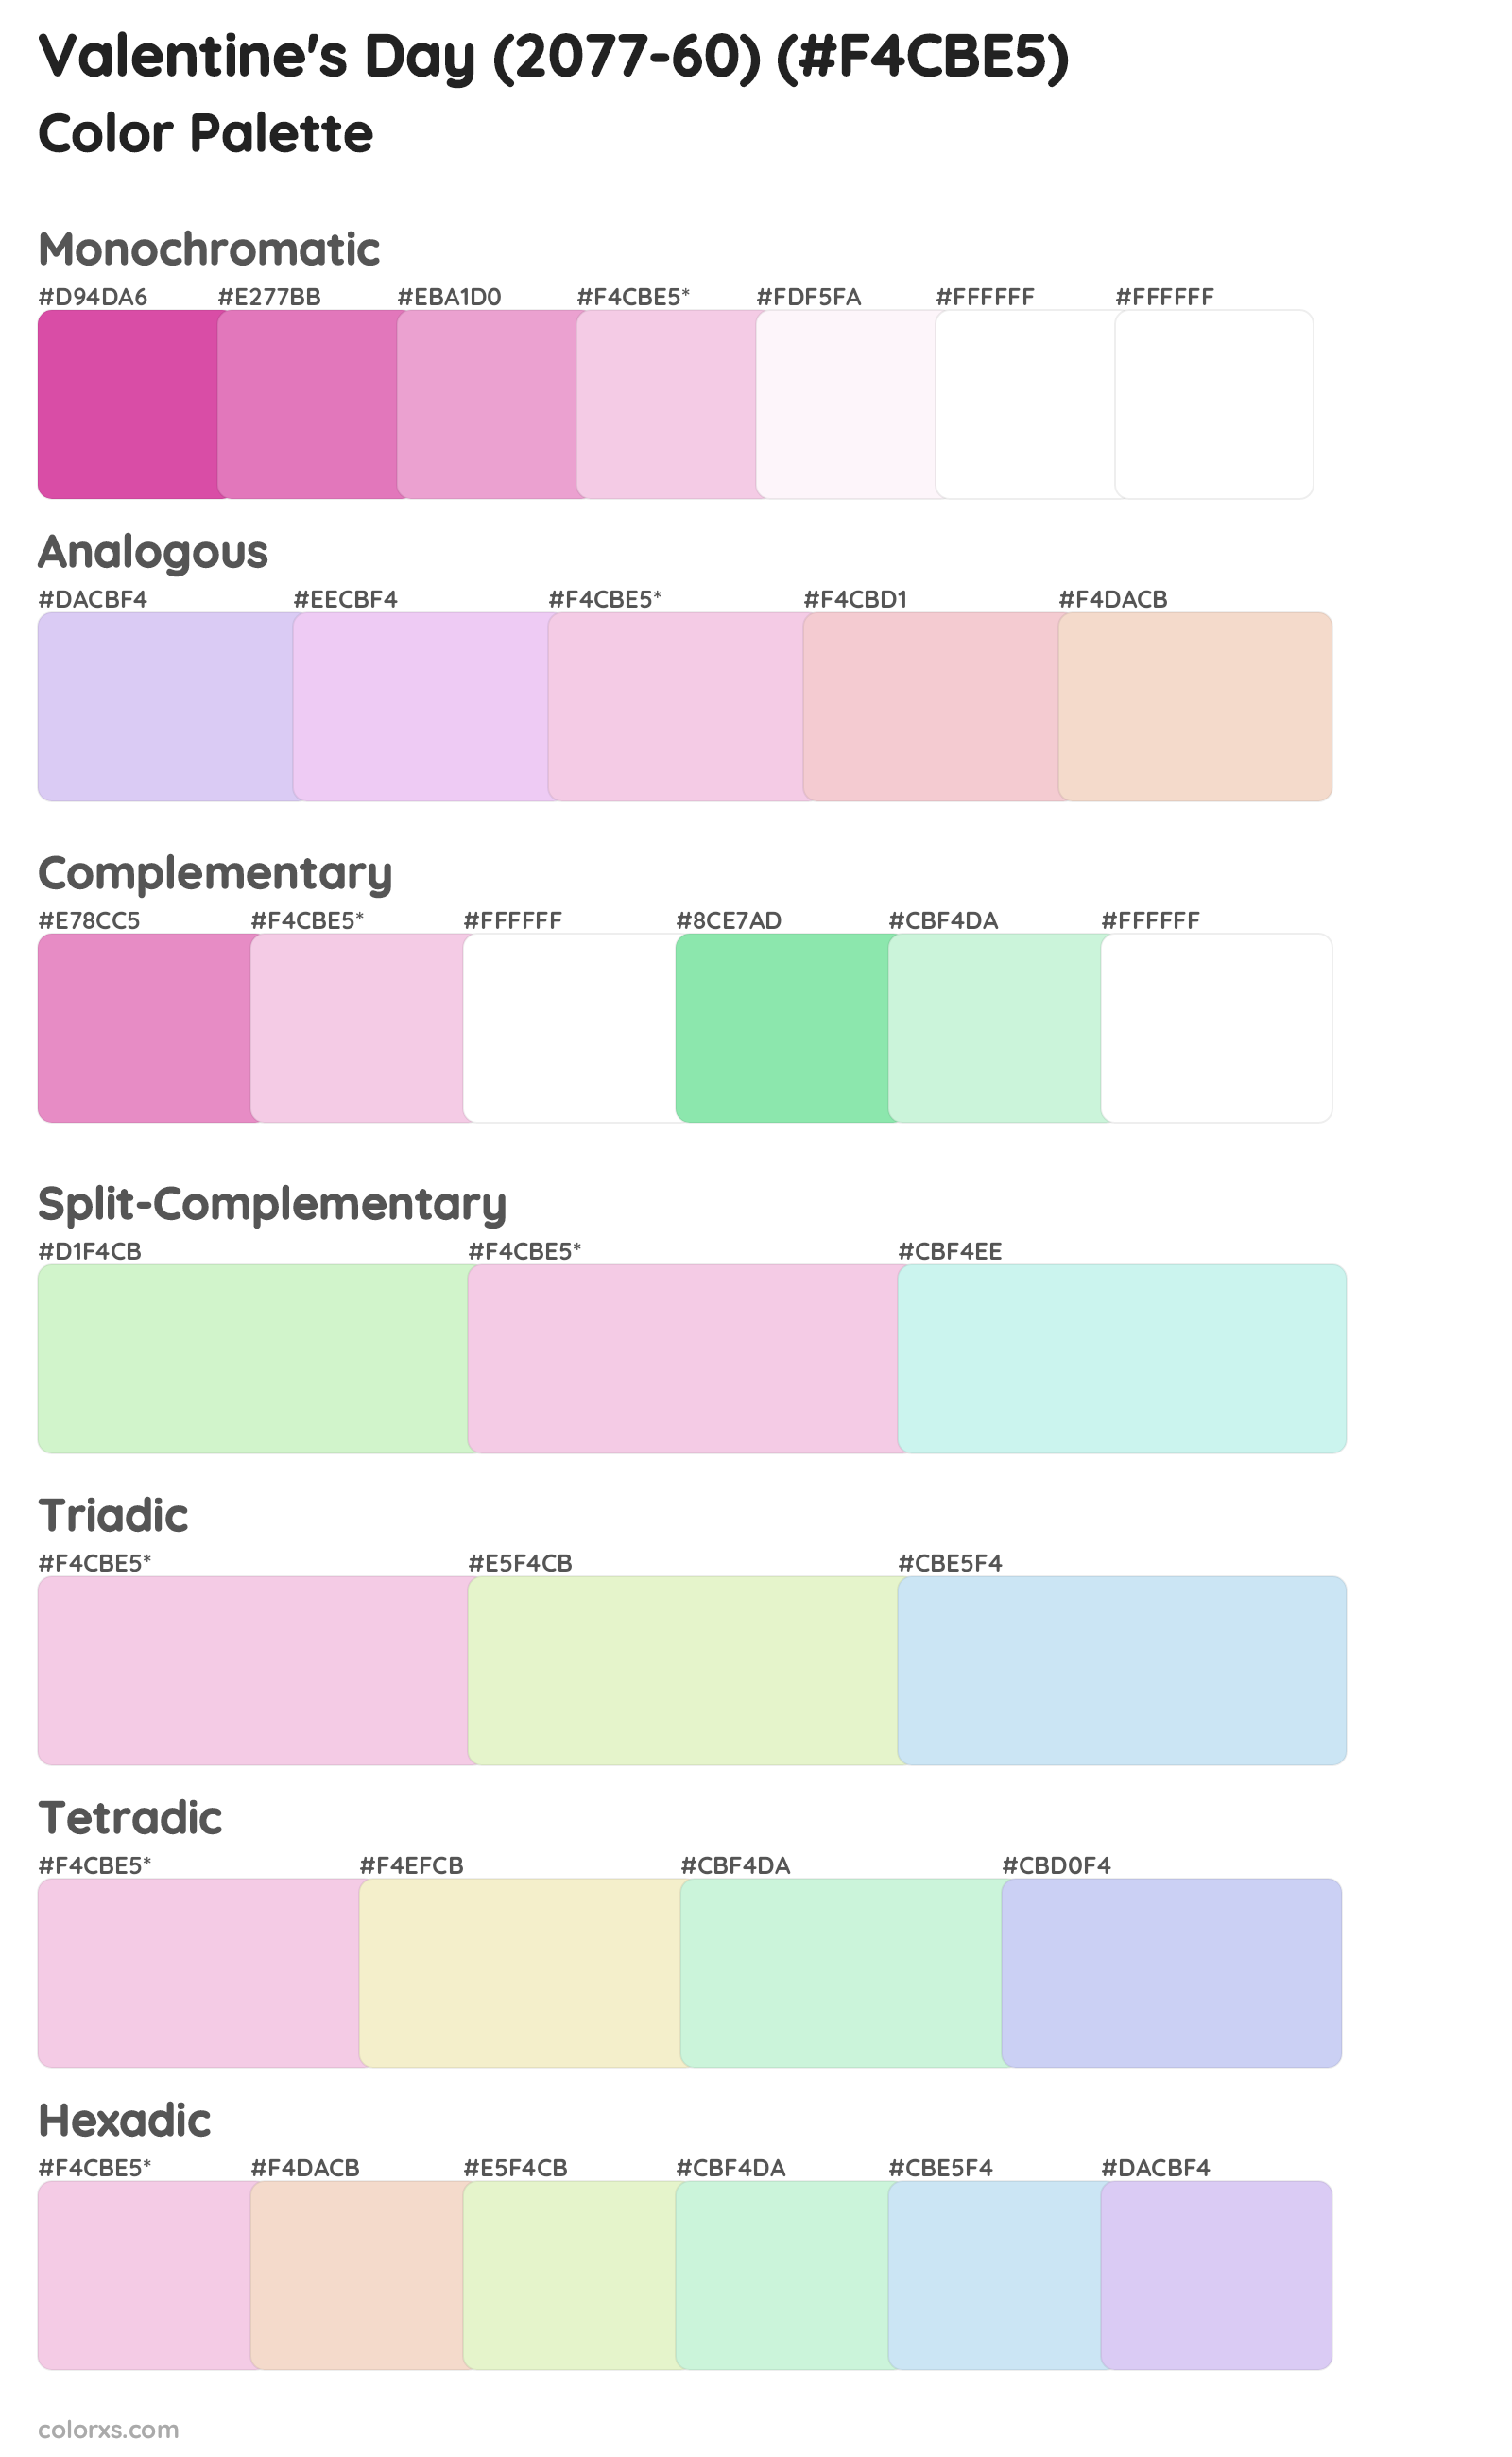 Valentine's Day (2077-60) Color Scheme Palettes